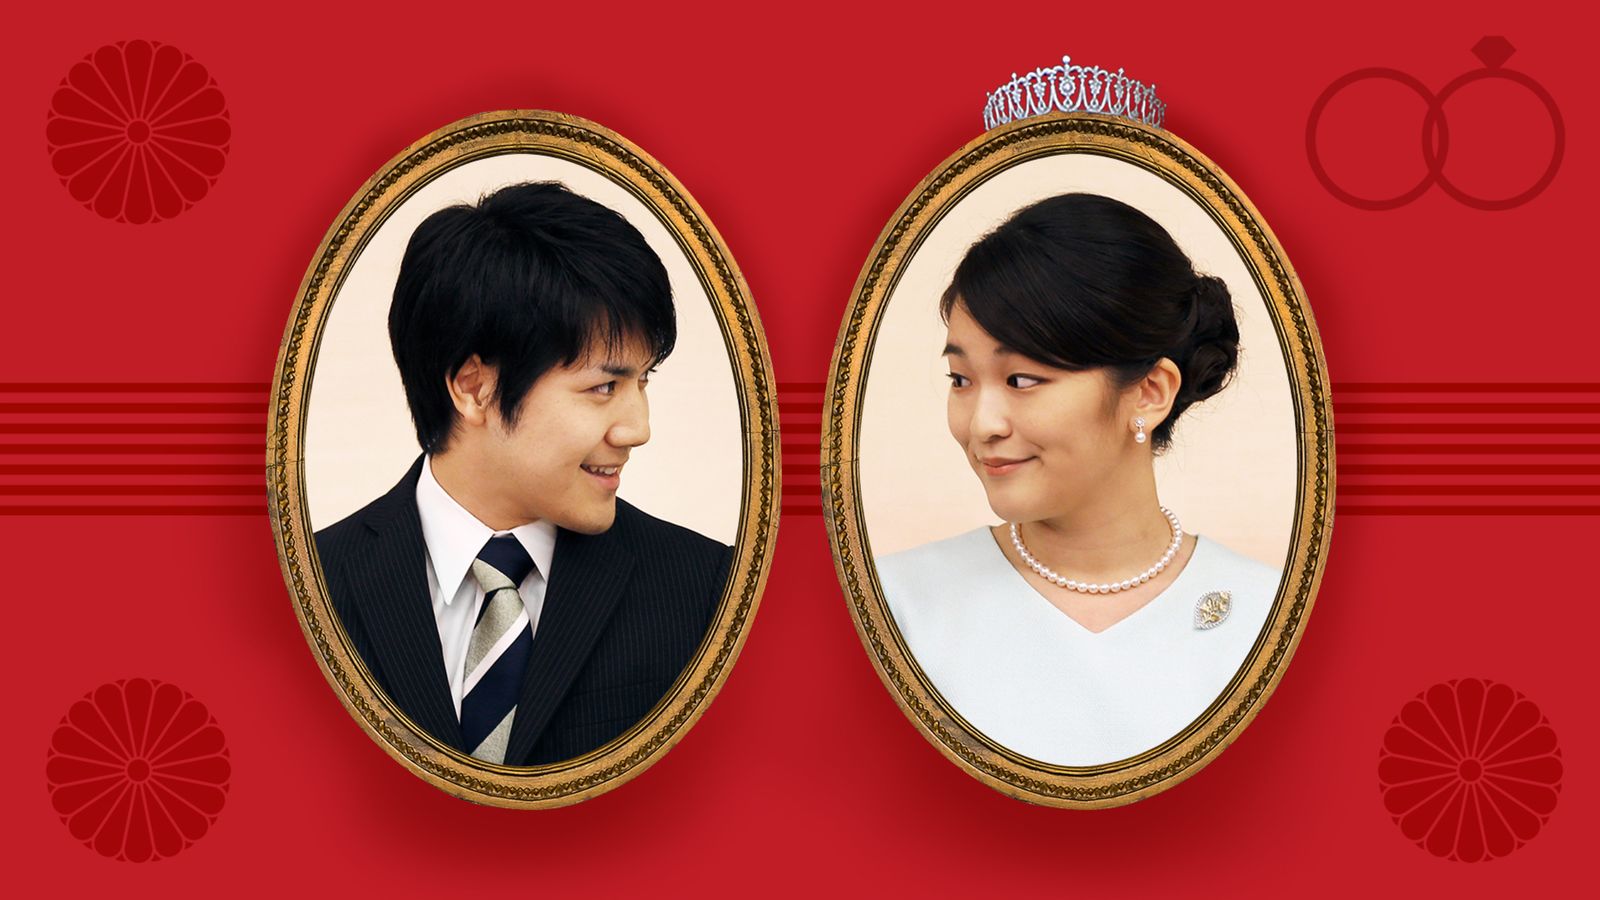 Japanese Mako Hentai Game - Japan's Princess Mako is going ahead with wedding to commoner Kei Komuro.  Not everyone approves | CNN